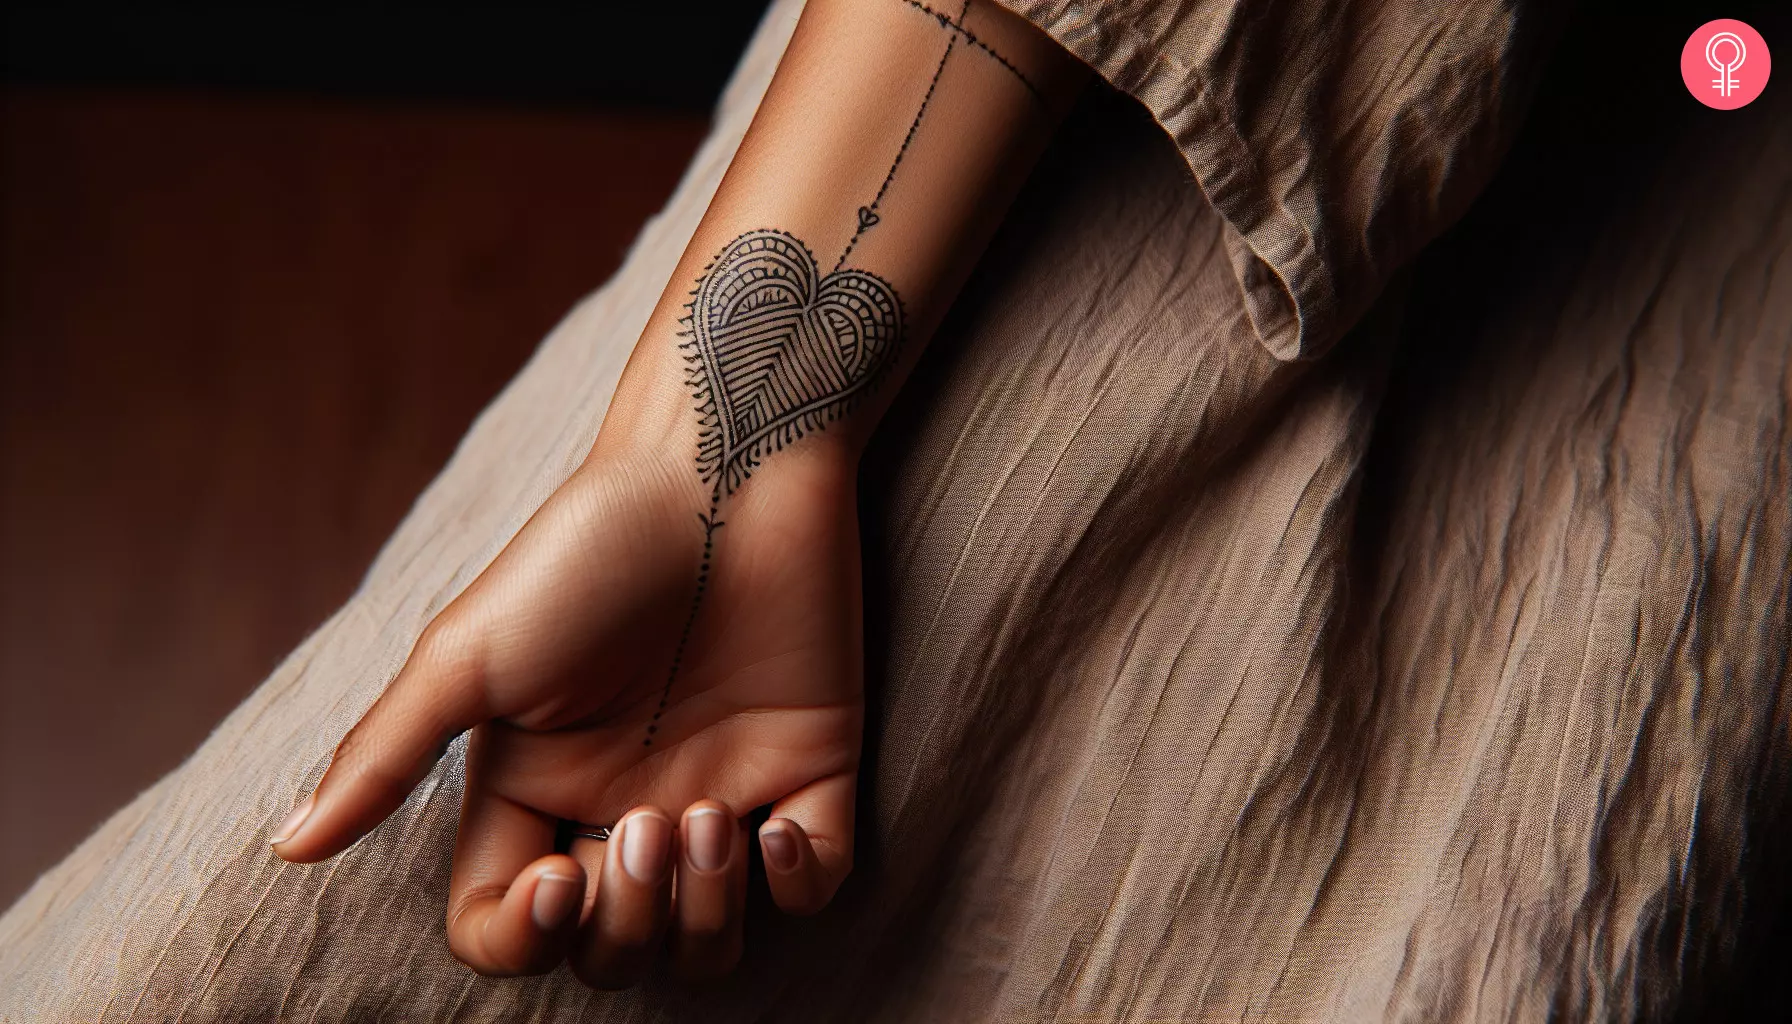 A tribal heart tattoo on the forearm